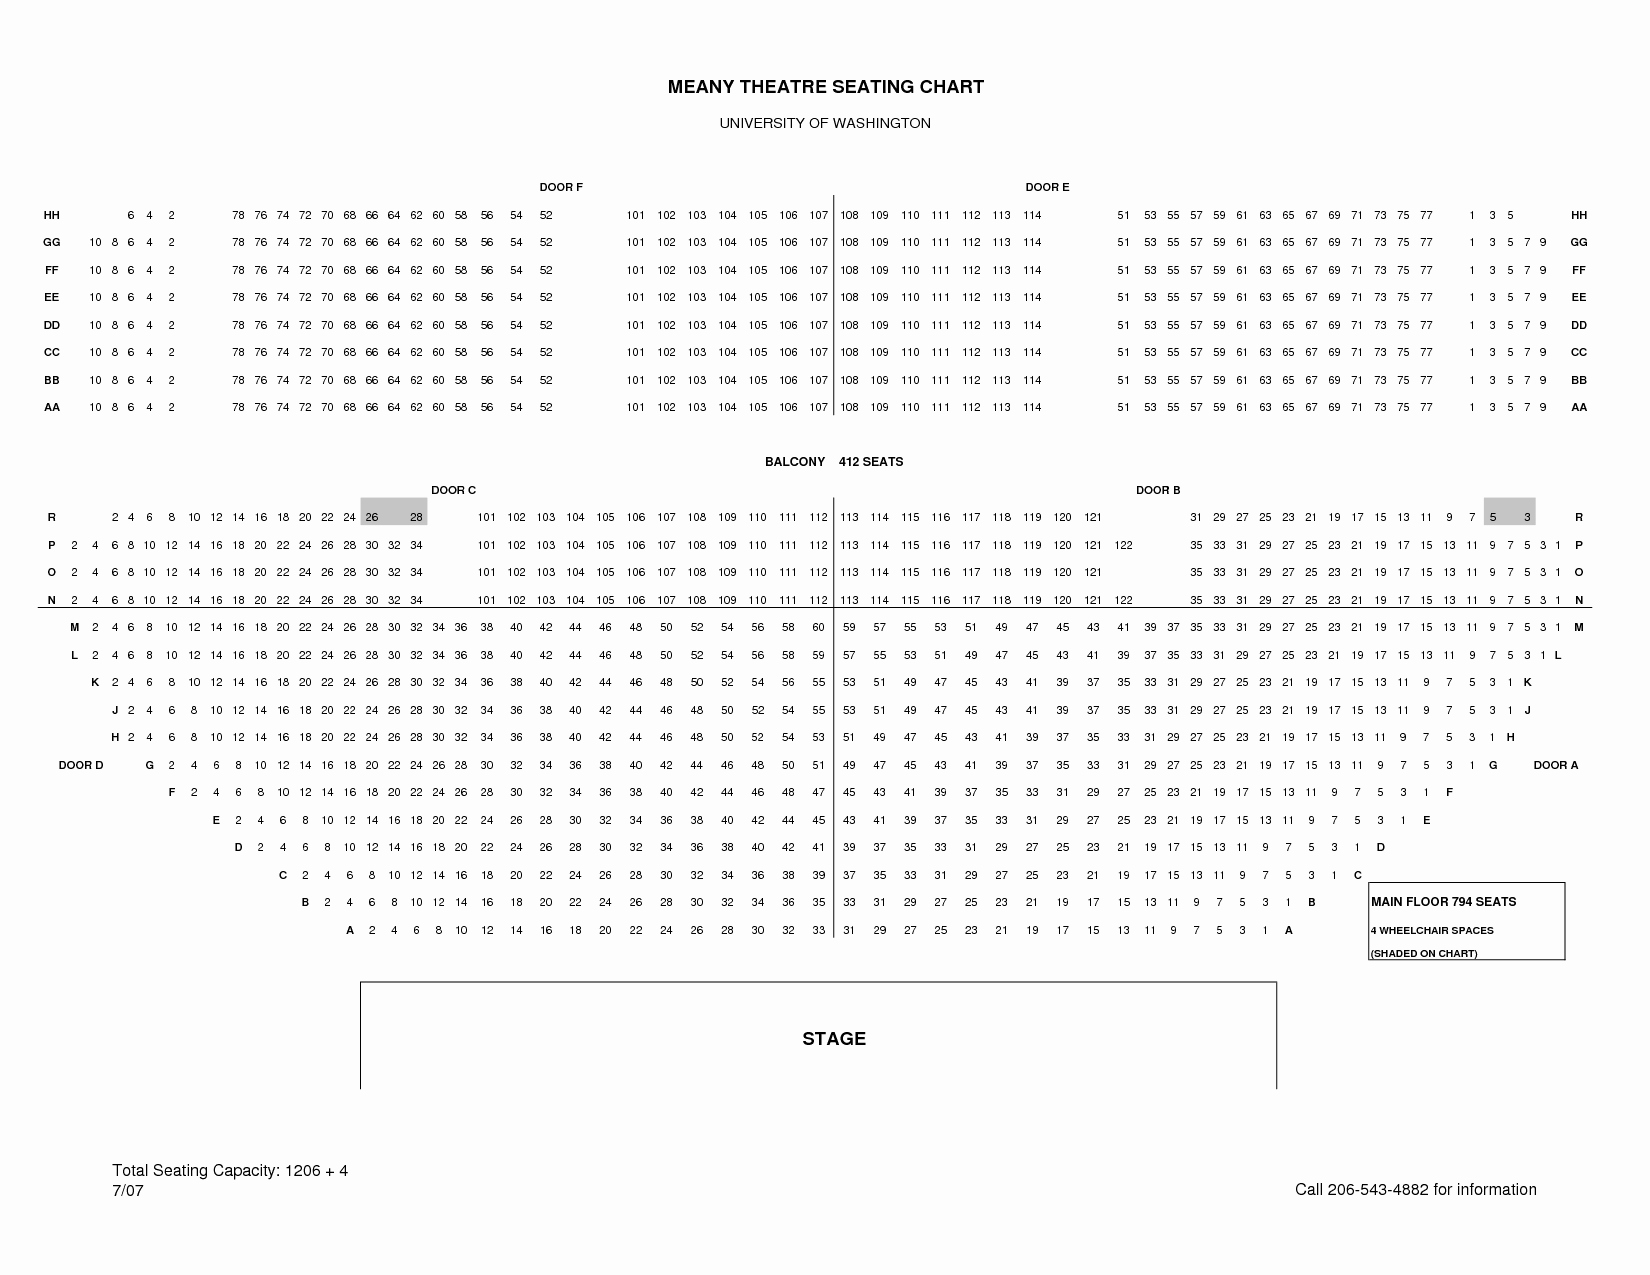 Auditorium Seating Chart Template Inspirational 4 Best Of Auditorium Seating Chart Template